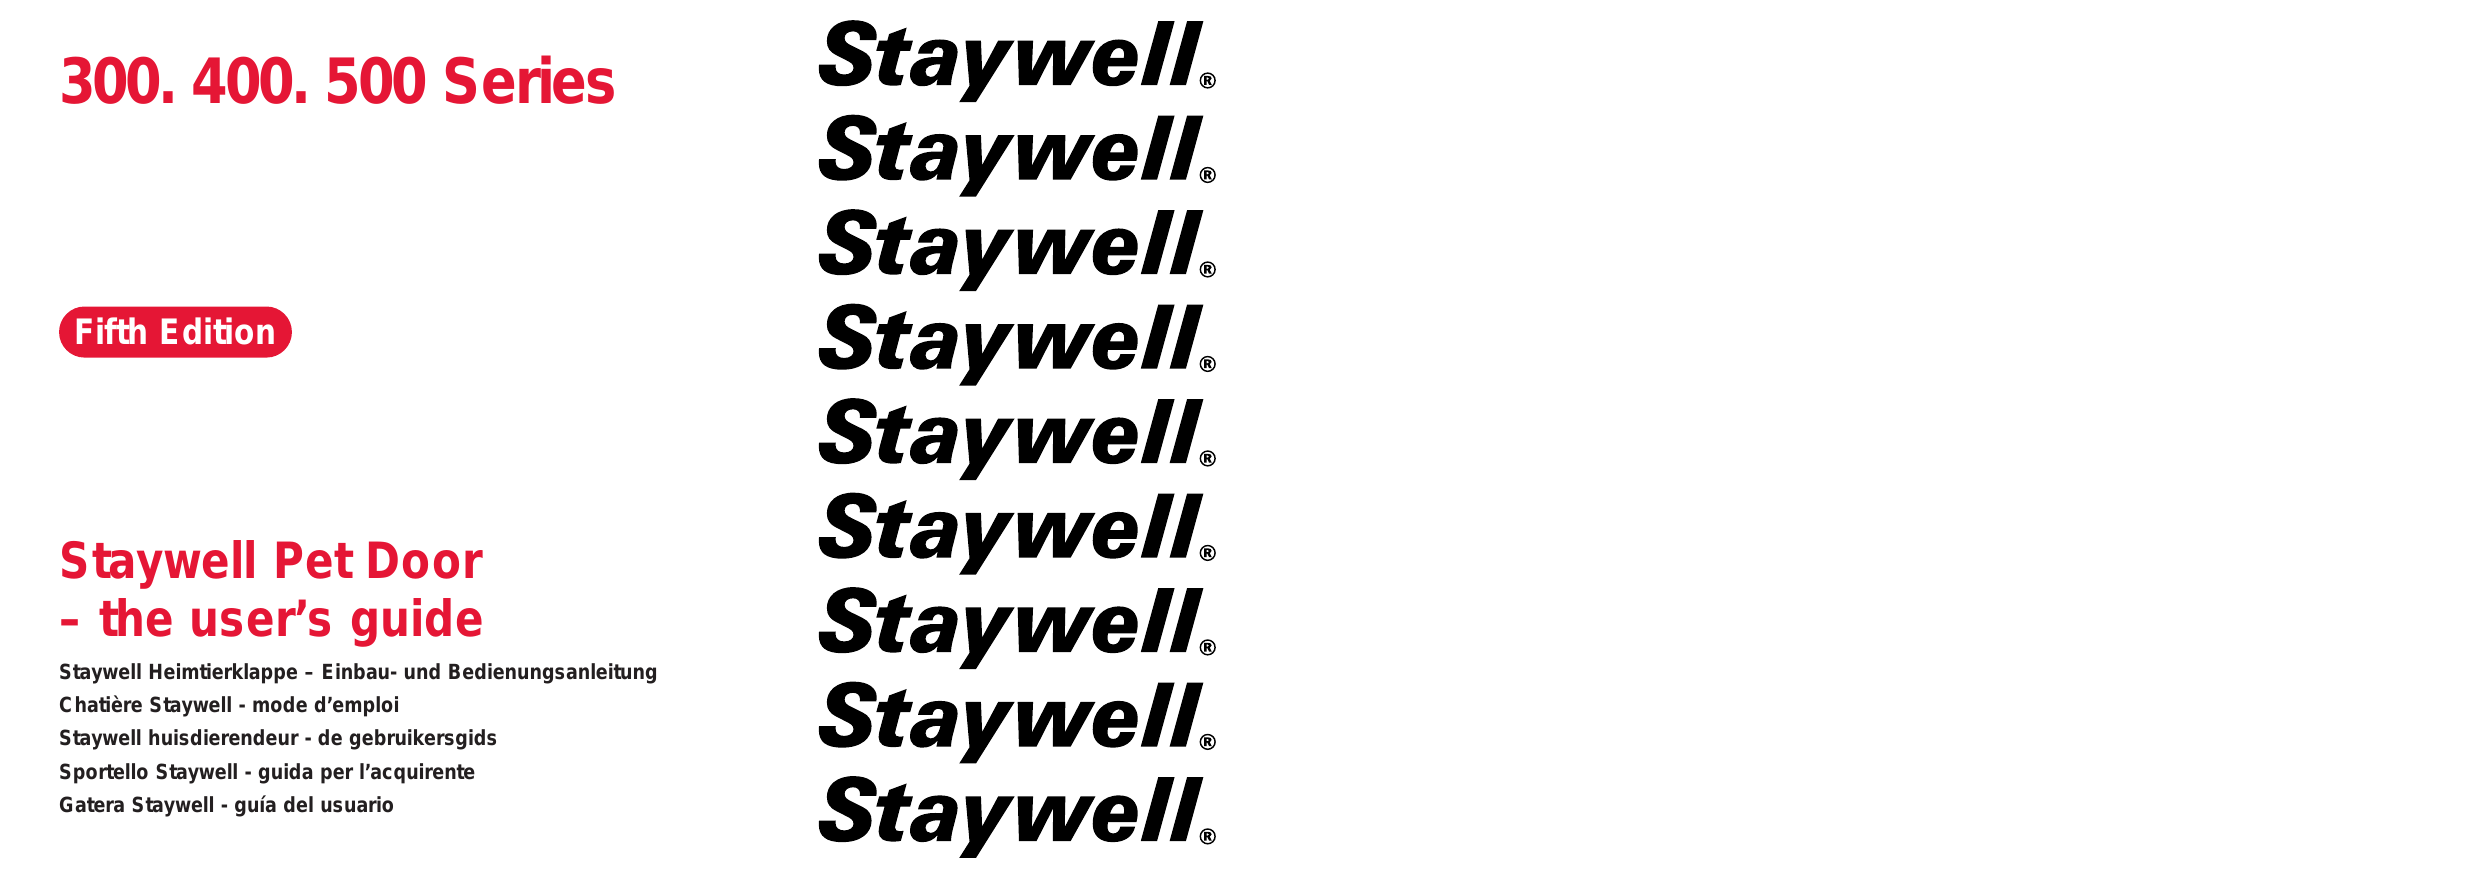 staywell 400